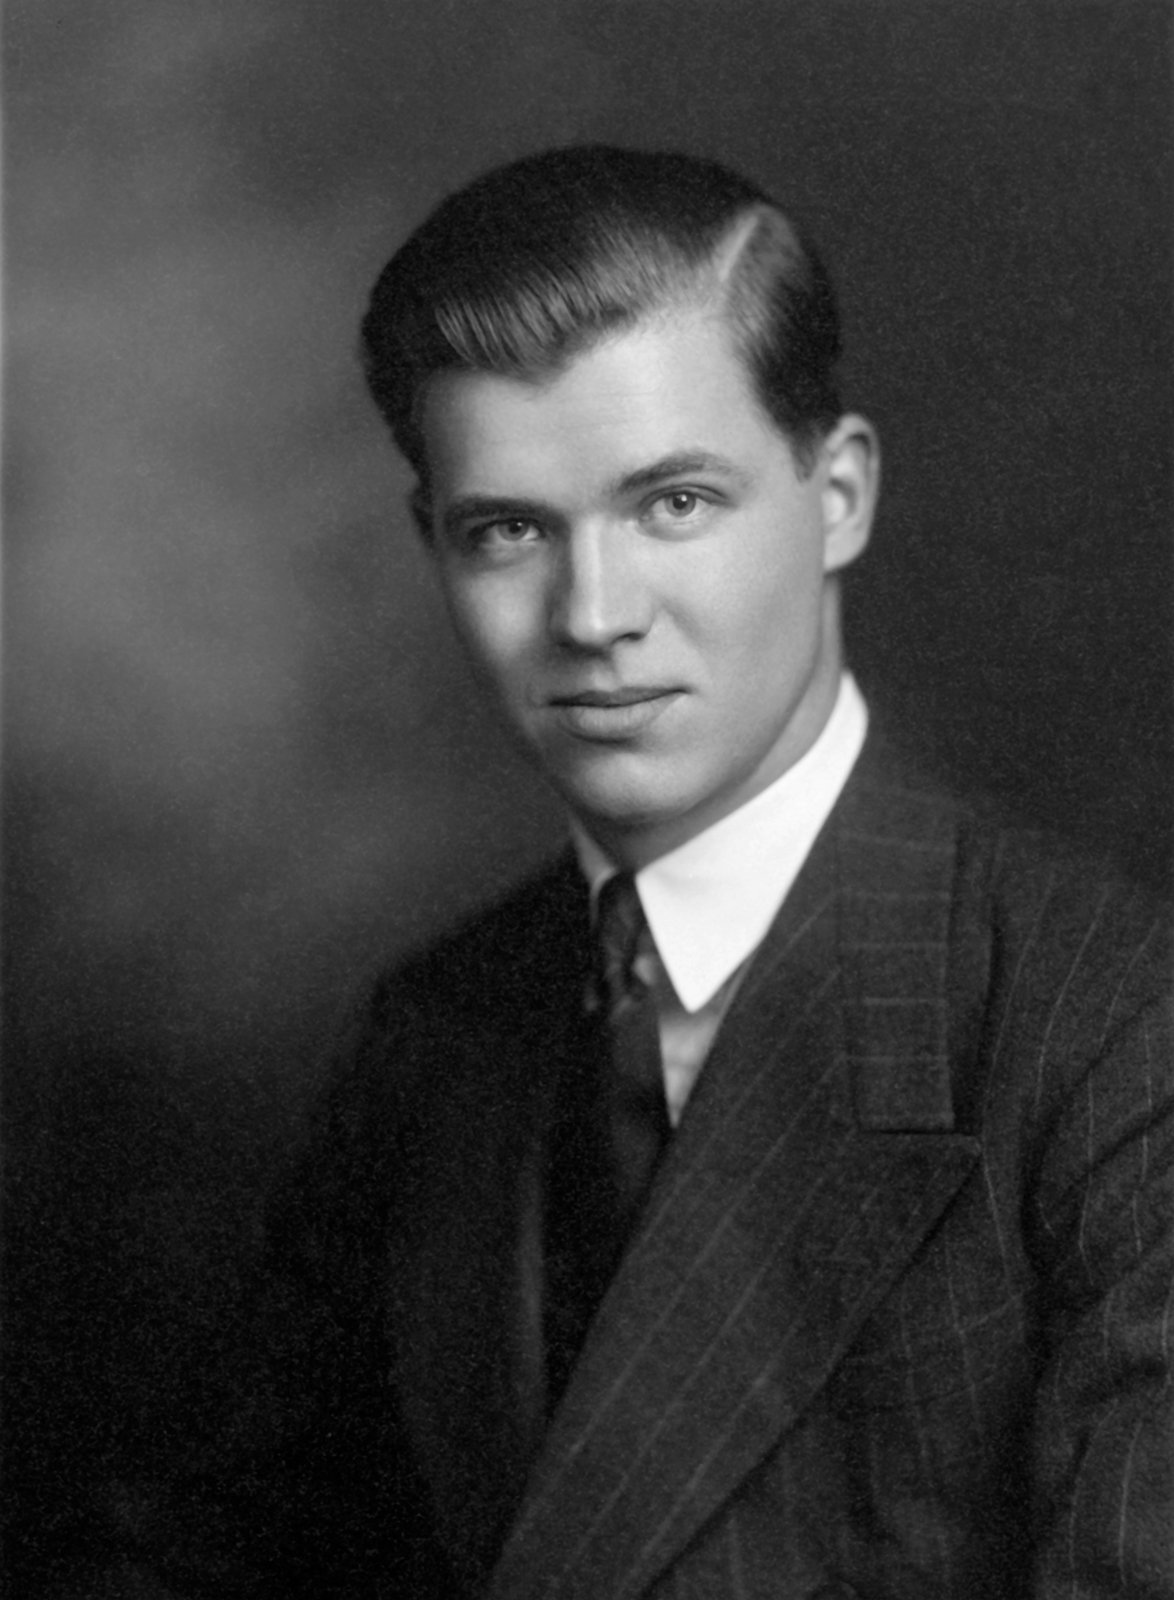 Portrait of my father, Edmund Davis, possibly taken around 1938